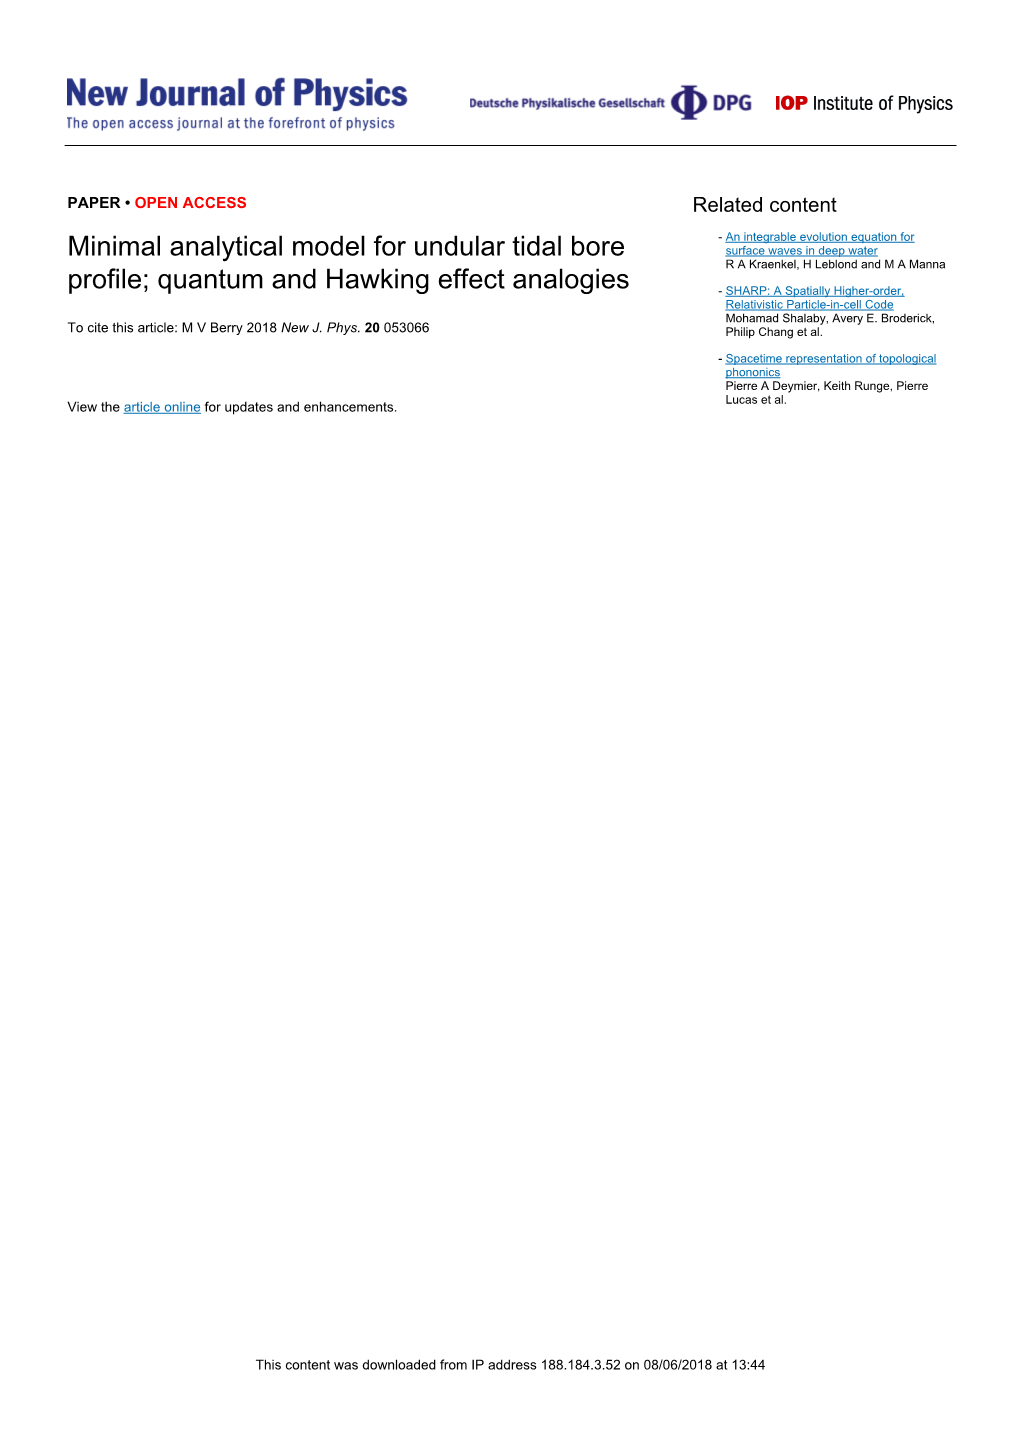 Minimal Analytical Model for Undular Tidal Bore Profile